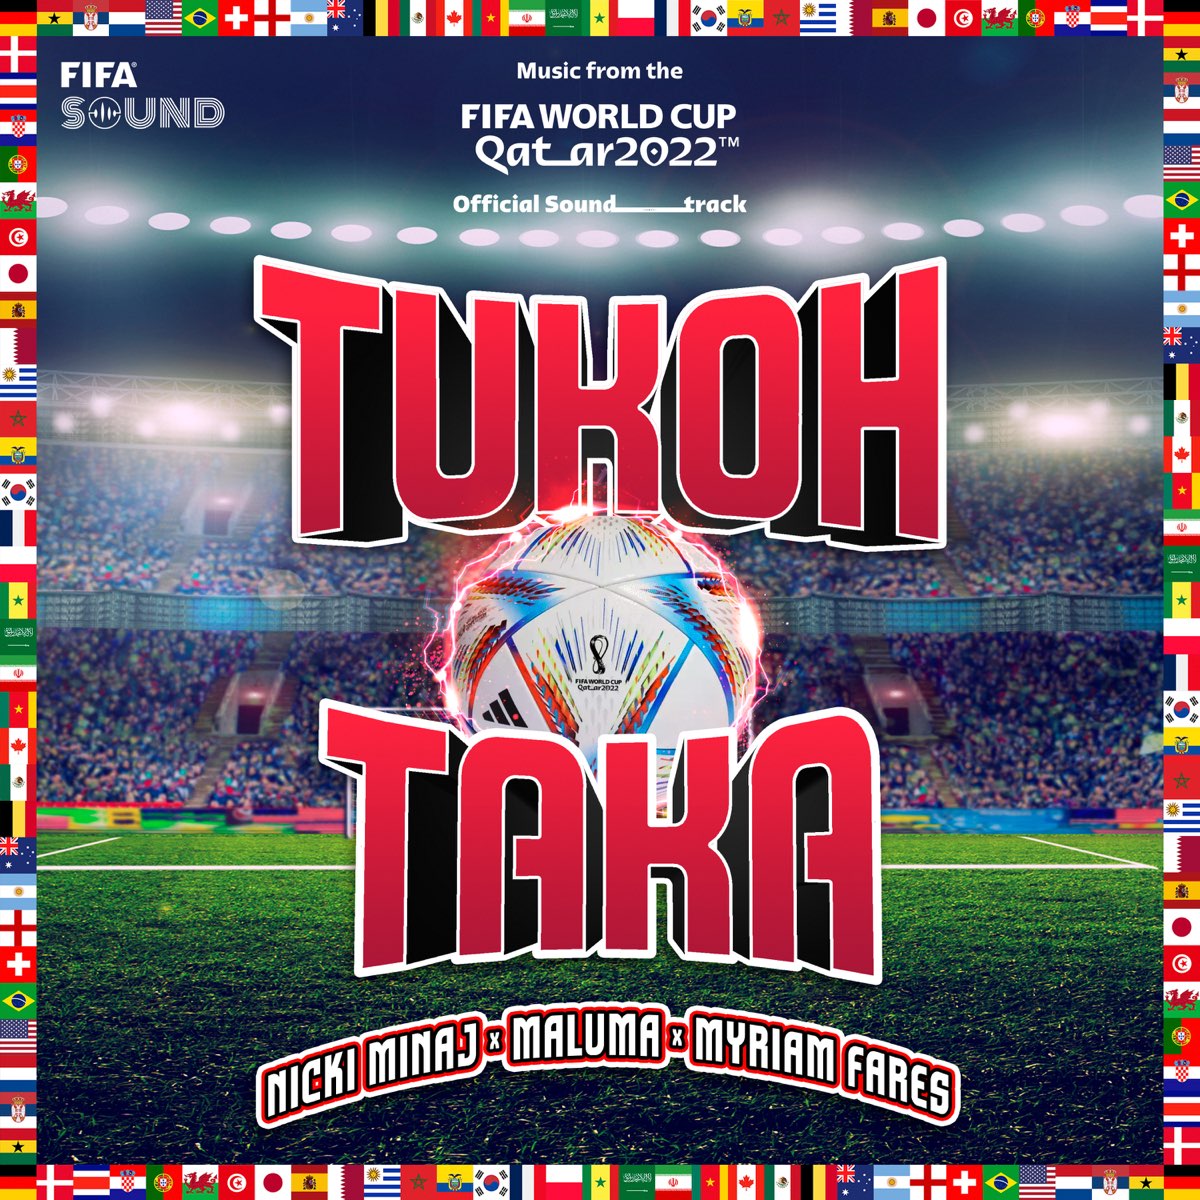 Nicki Minaj, Maluma & Myriam Fares - Tukoh Taka (Feat. FIFA Sound)